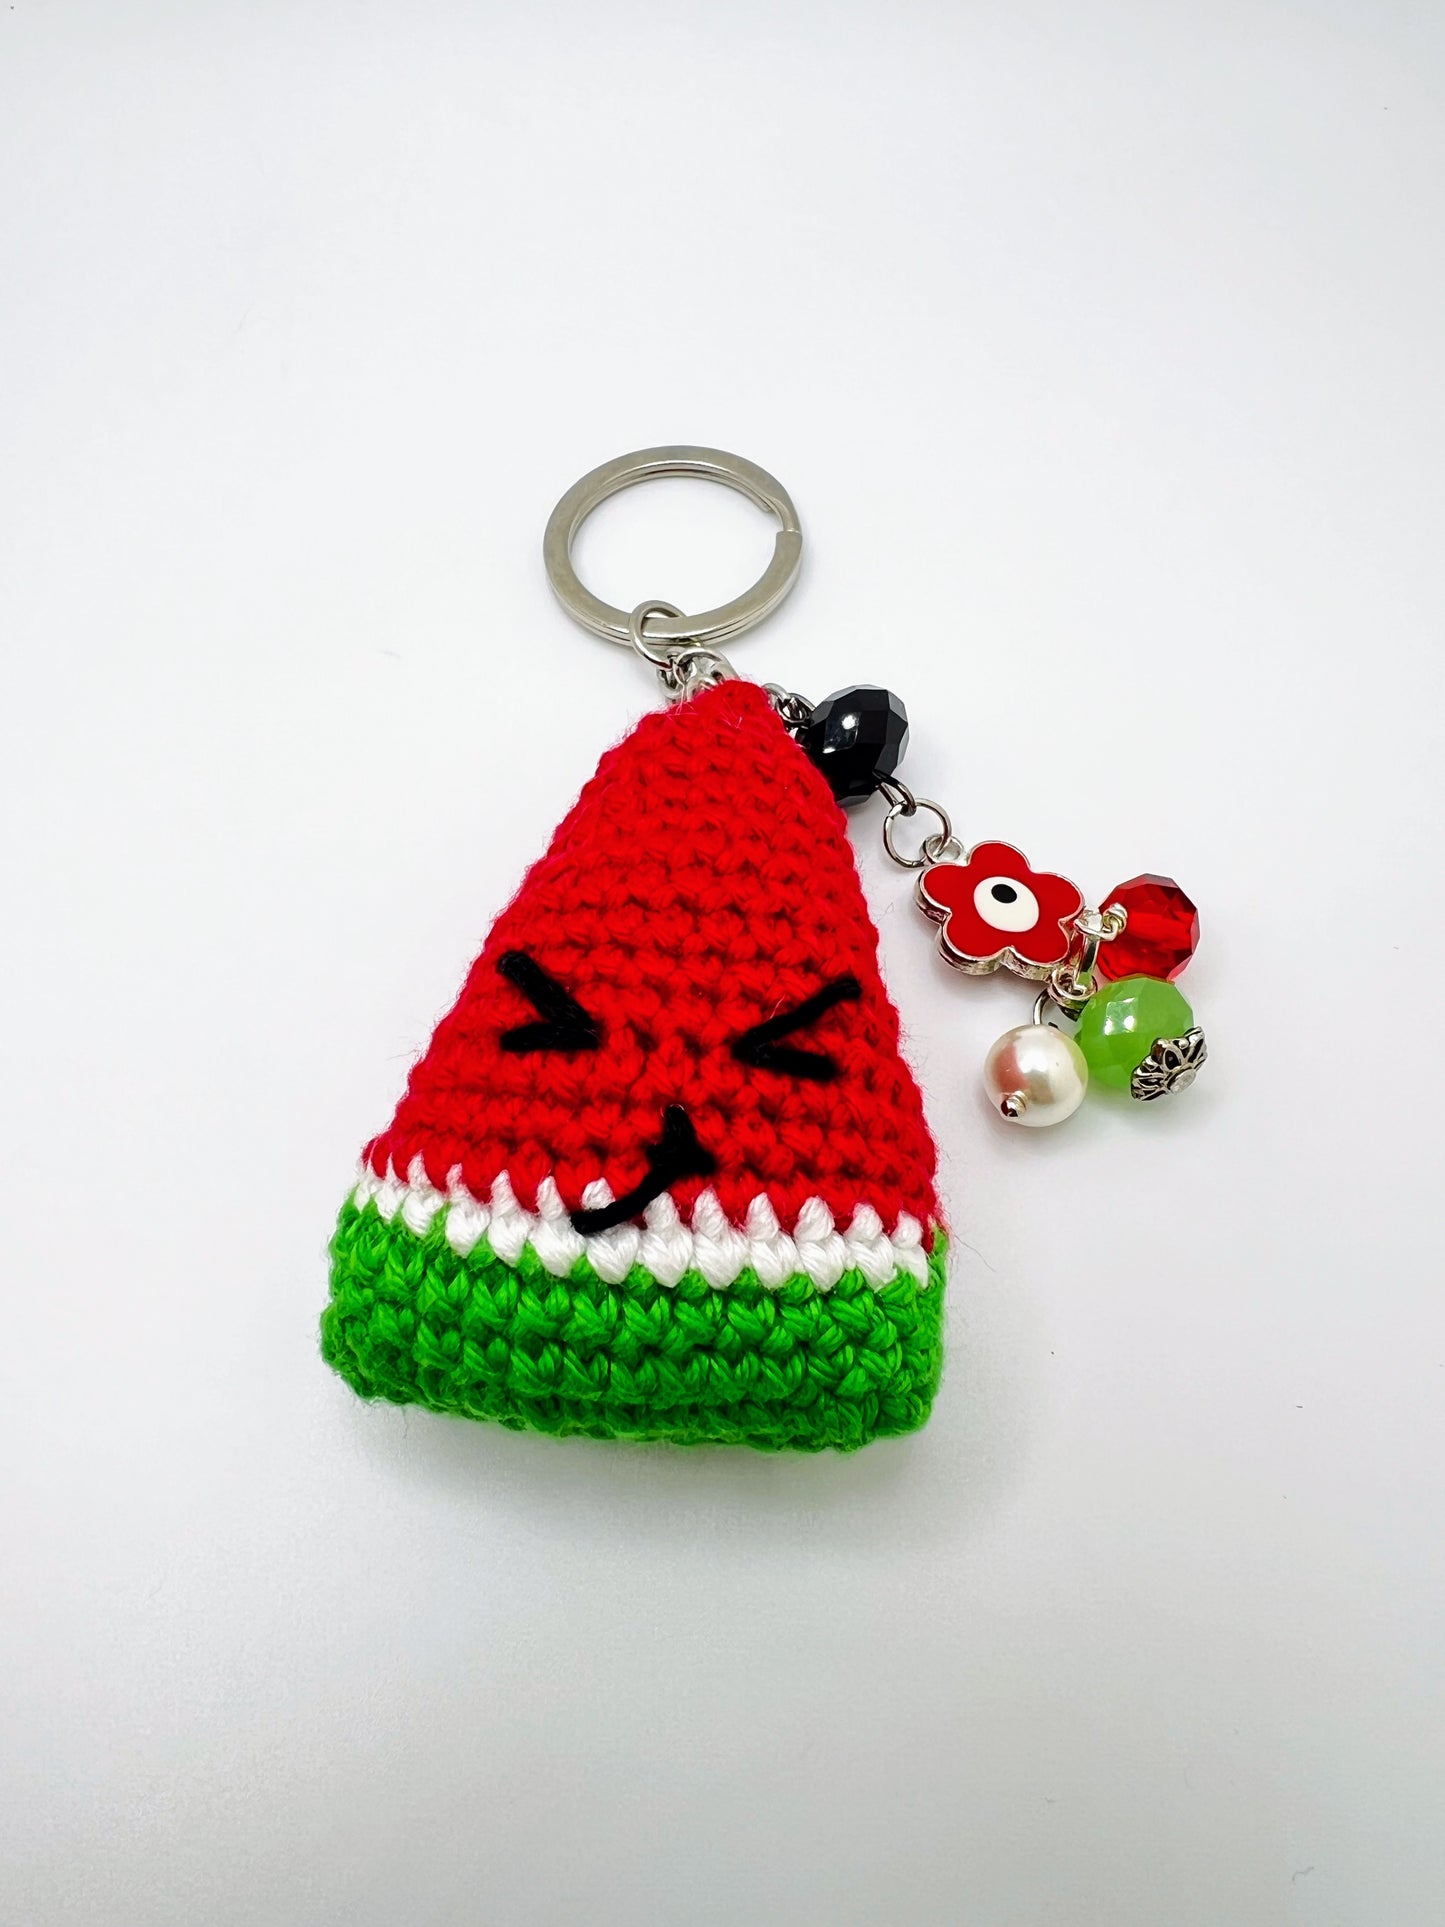 Small Slice Watermelon 🍉 Keychain - Crochet Knitted Amigurumi Toy